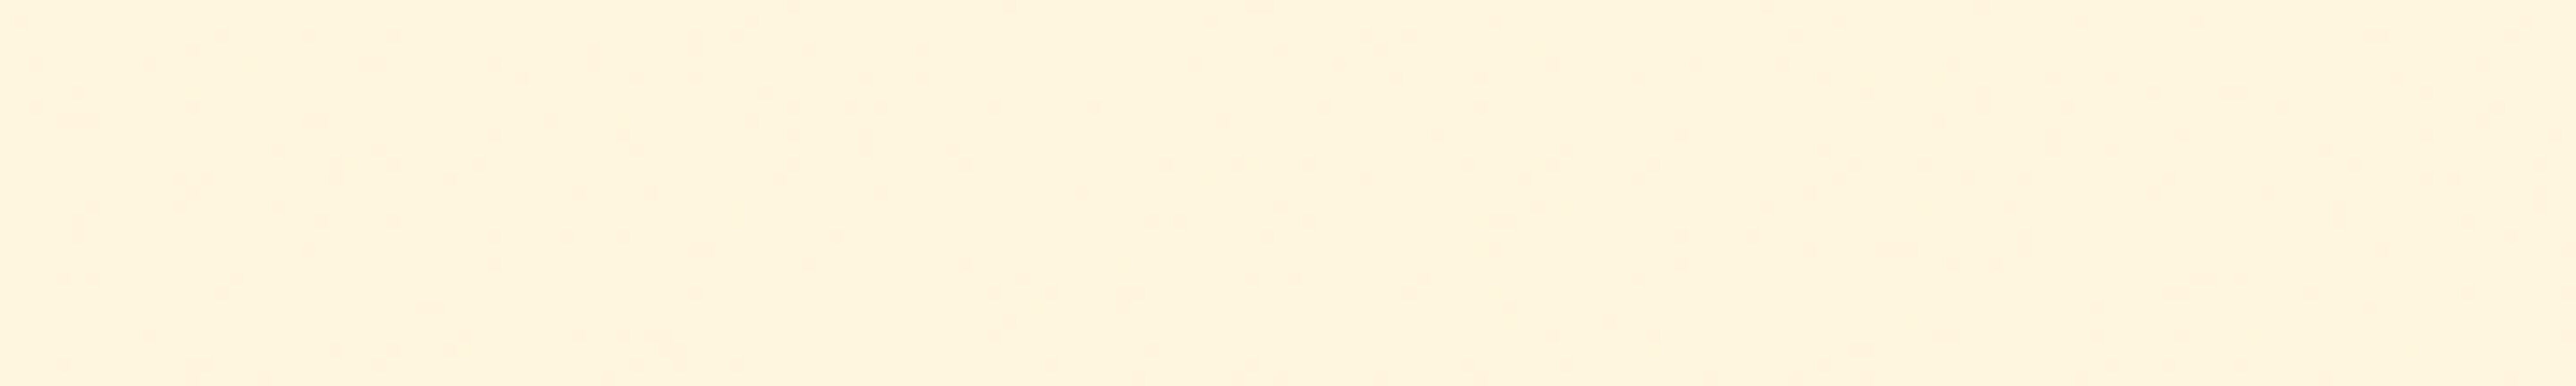 skai® colore classico vanille            0,40 1440